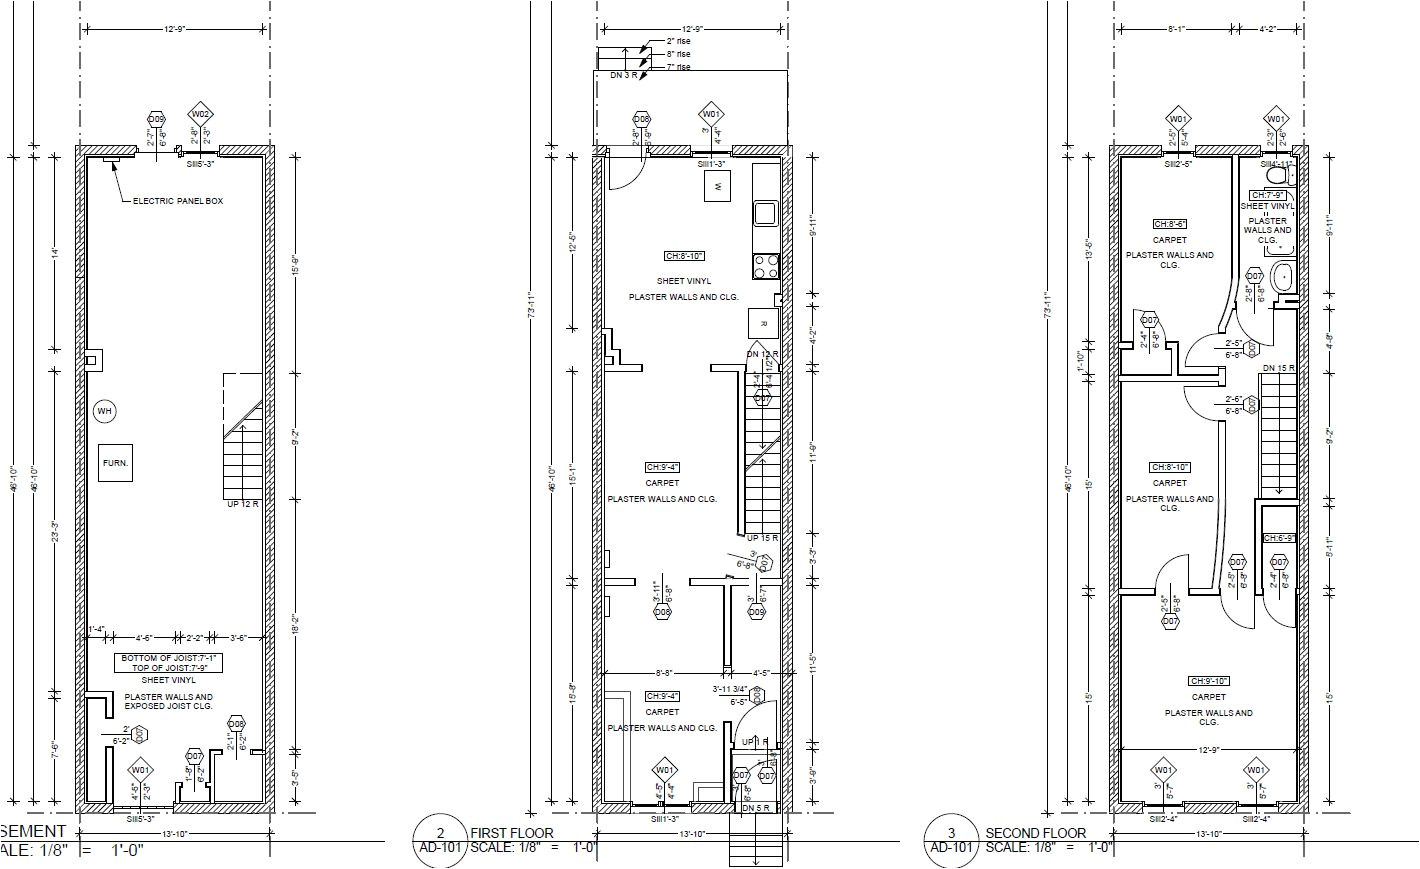 Narrow Home Plans Narrow Row House Plans 2018 House Plans and Home Design